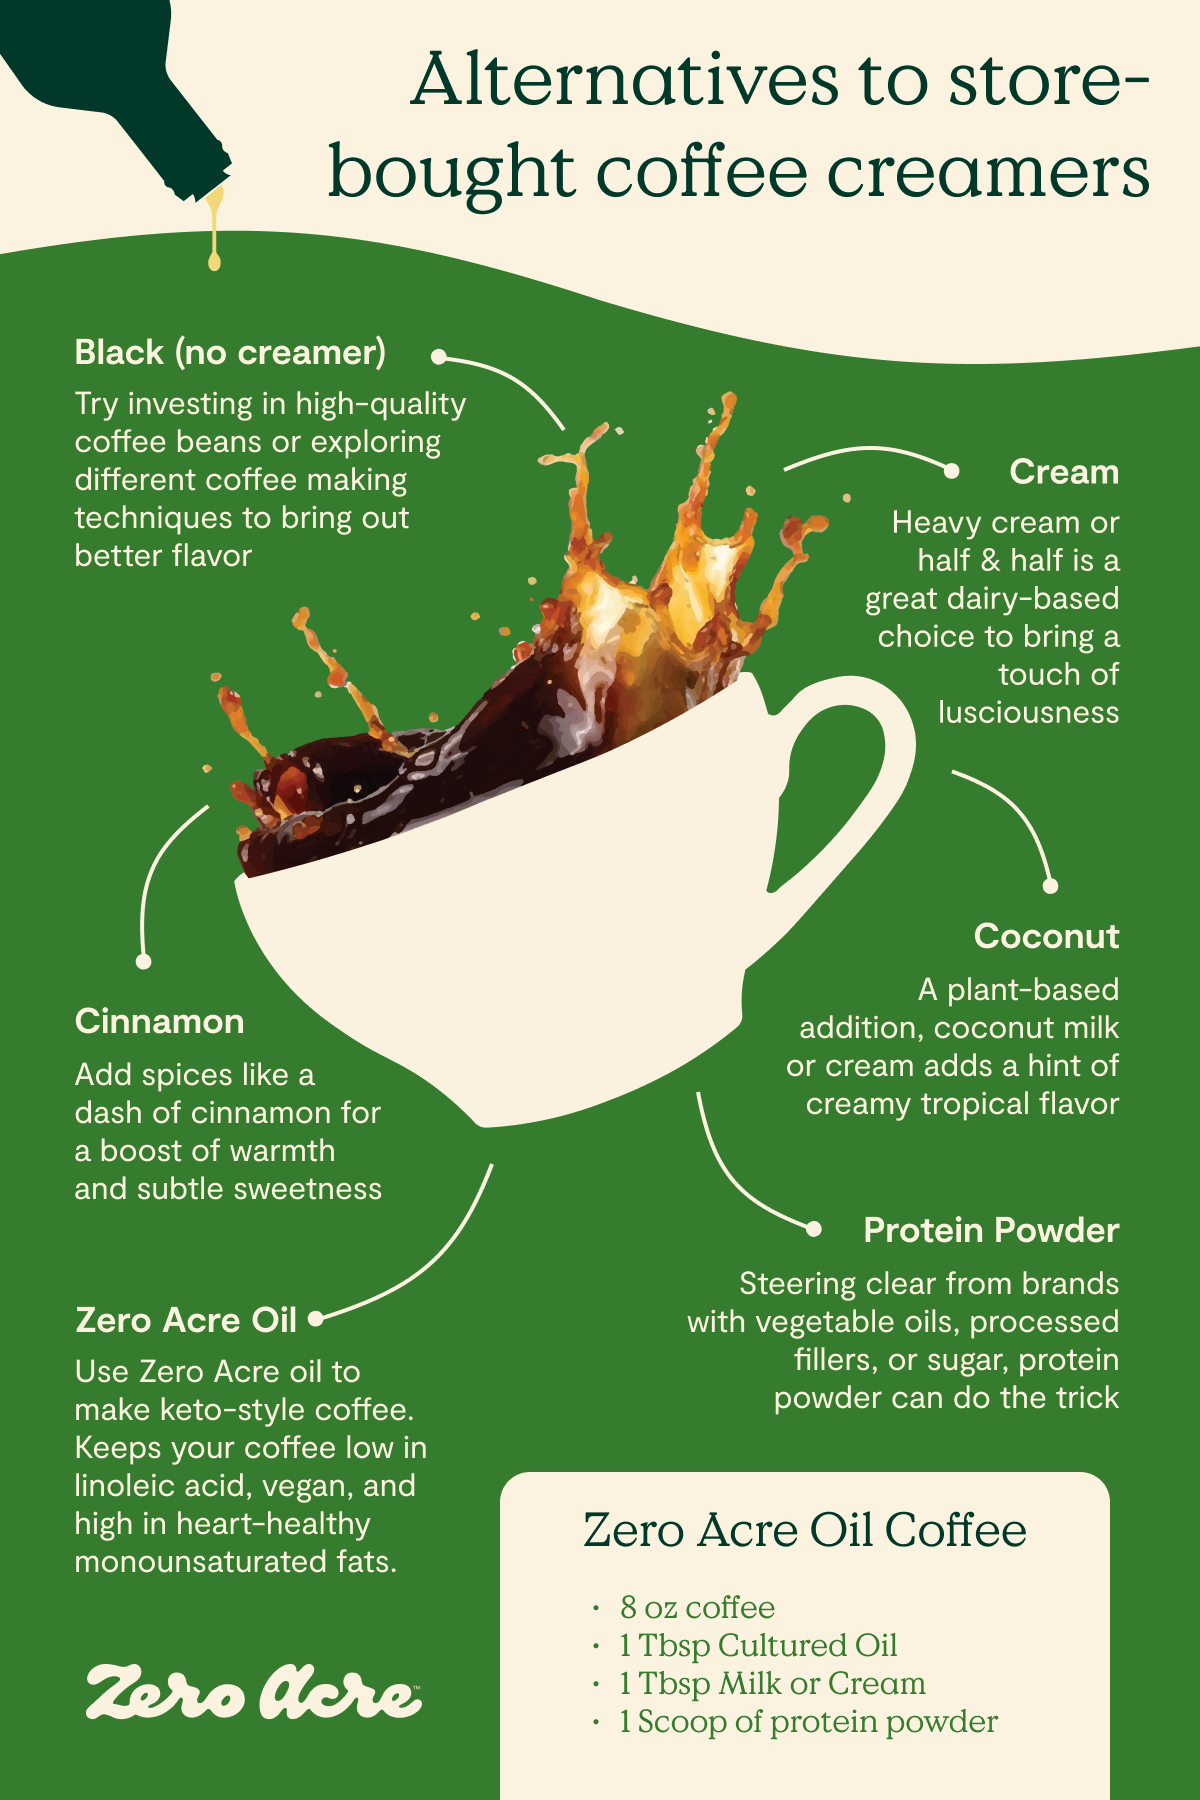 Coffee Creamers - Order Online & Save